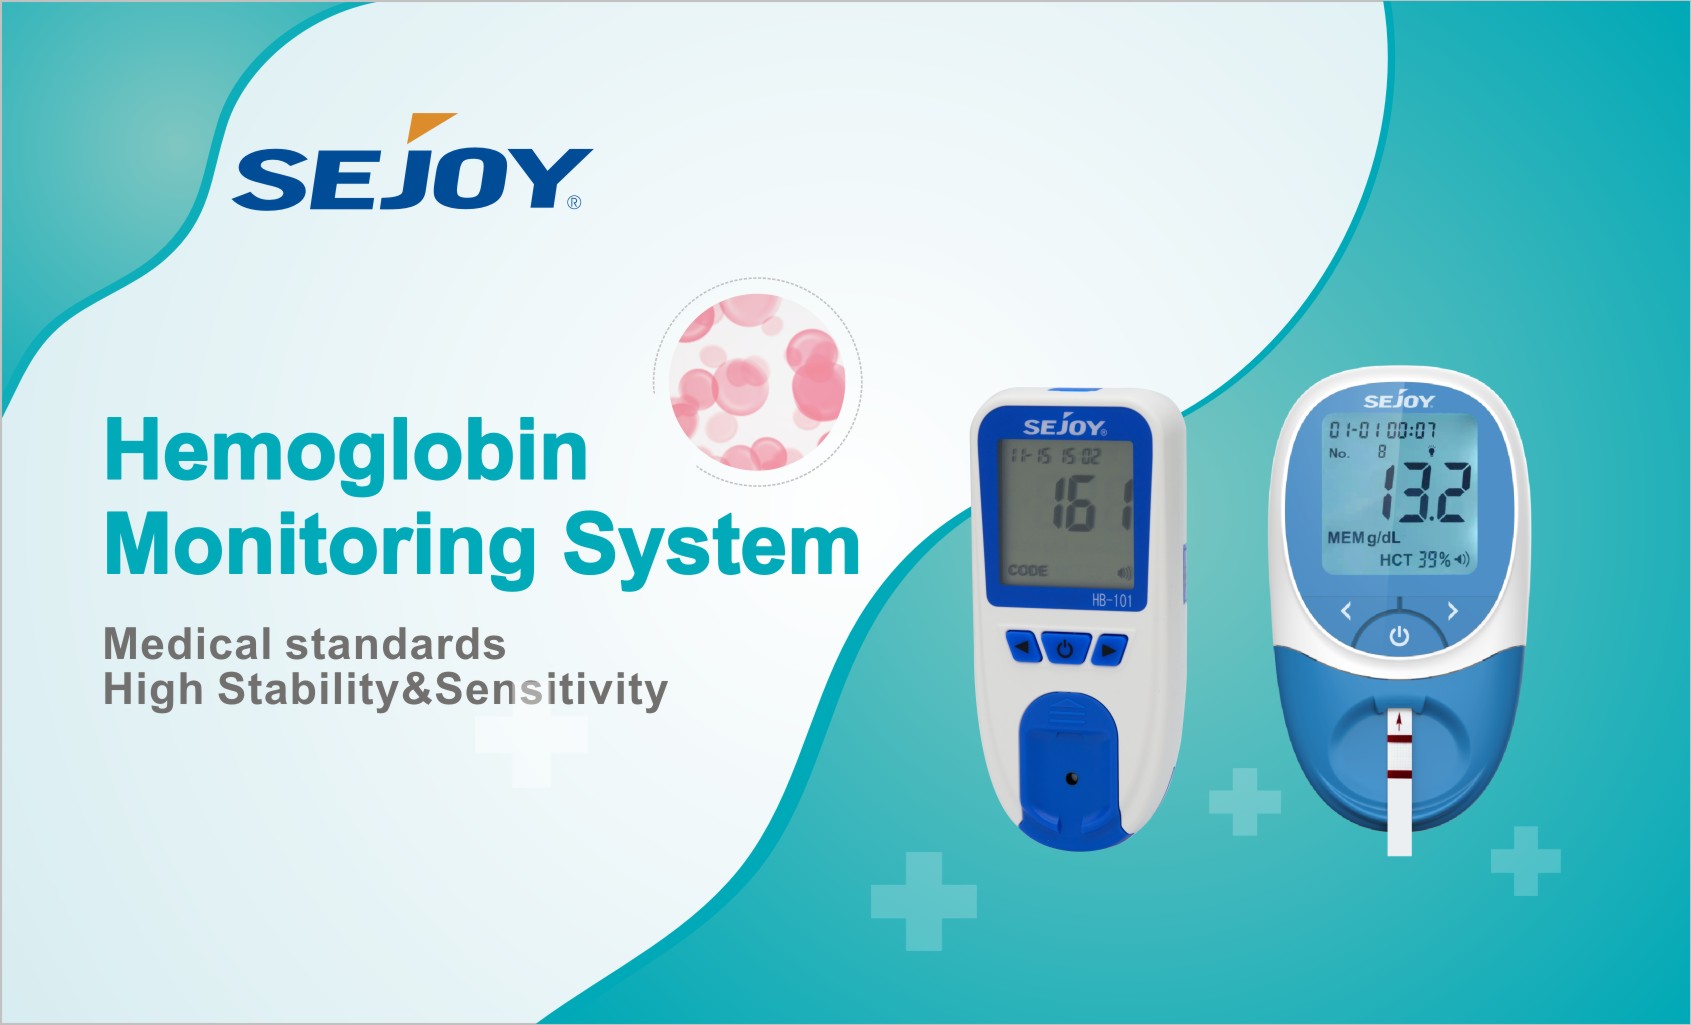 https://www.sejoy.com/hemoglobin-monitoring-system/